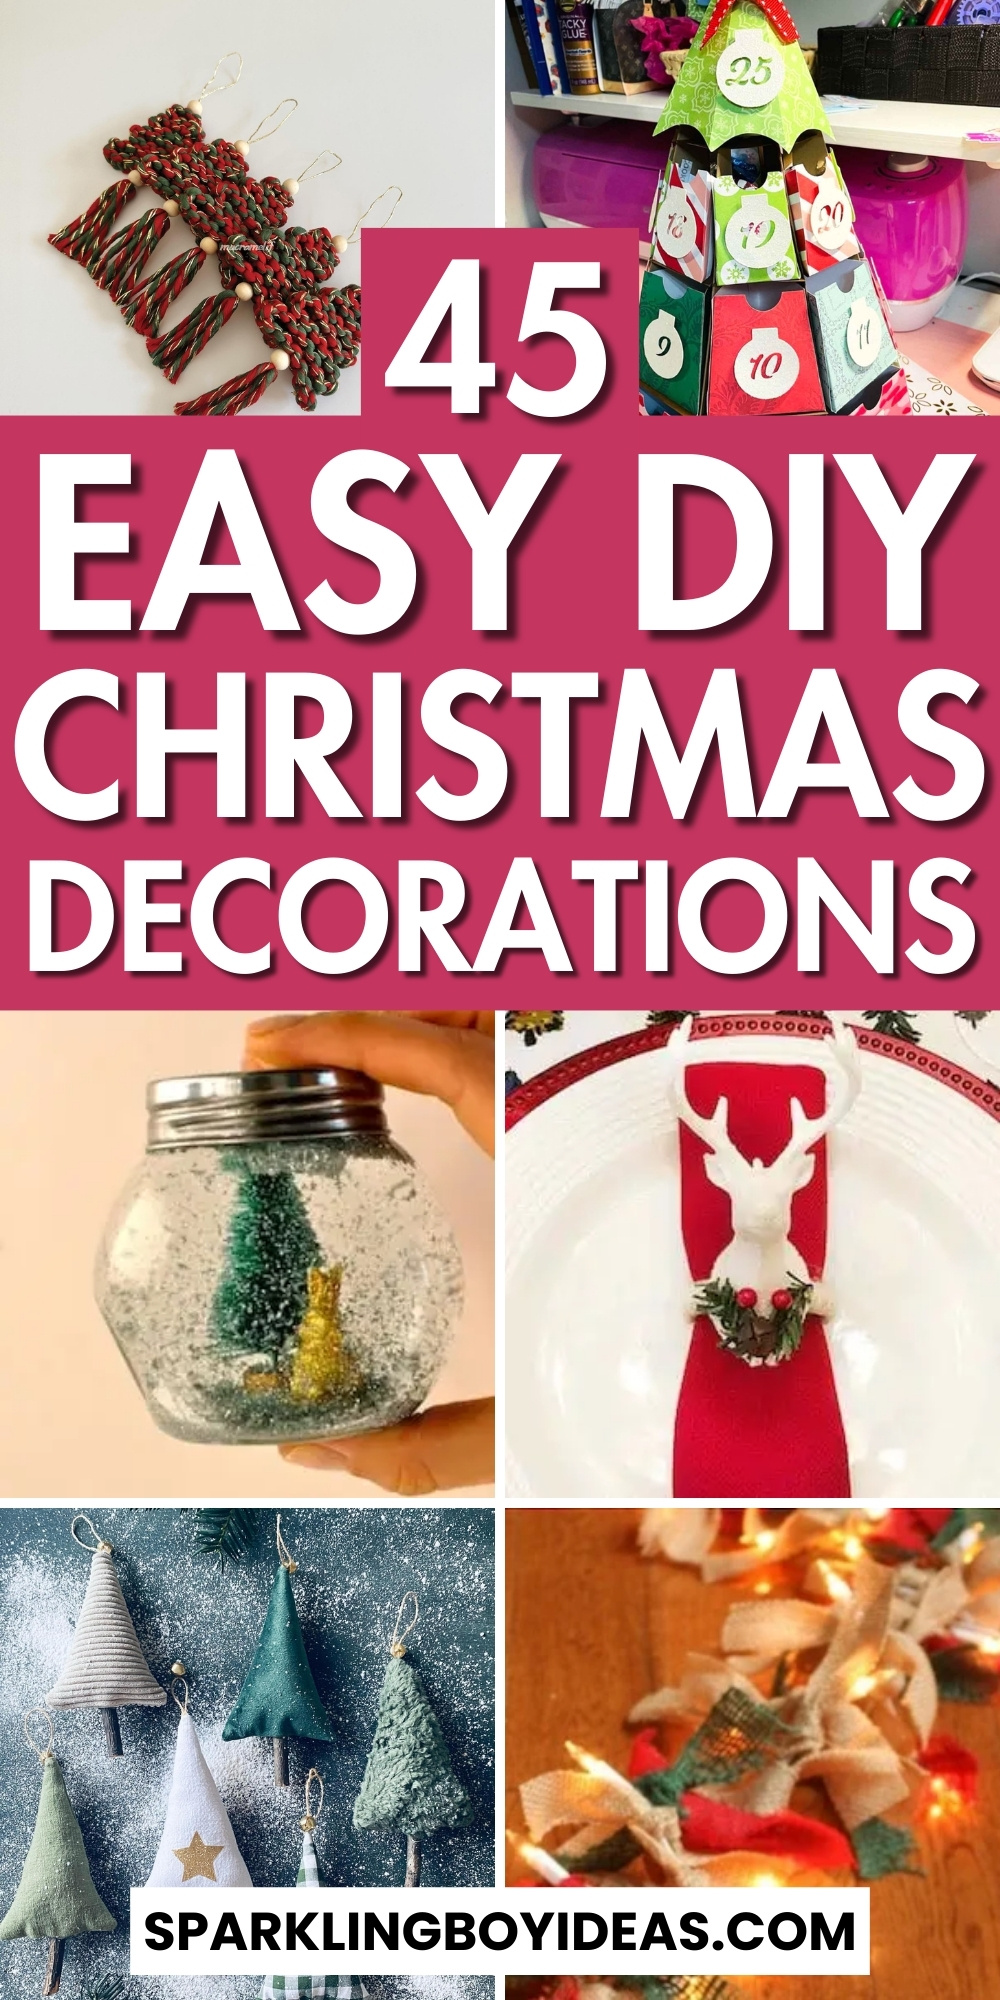 45 DIY Christmas Decorations - Sparkling Boy Ideas